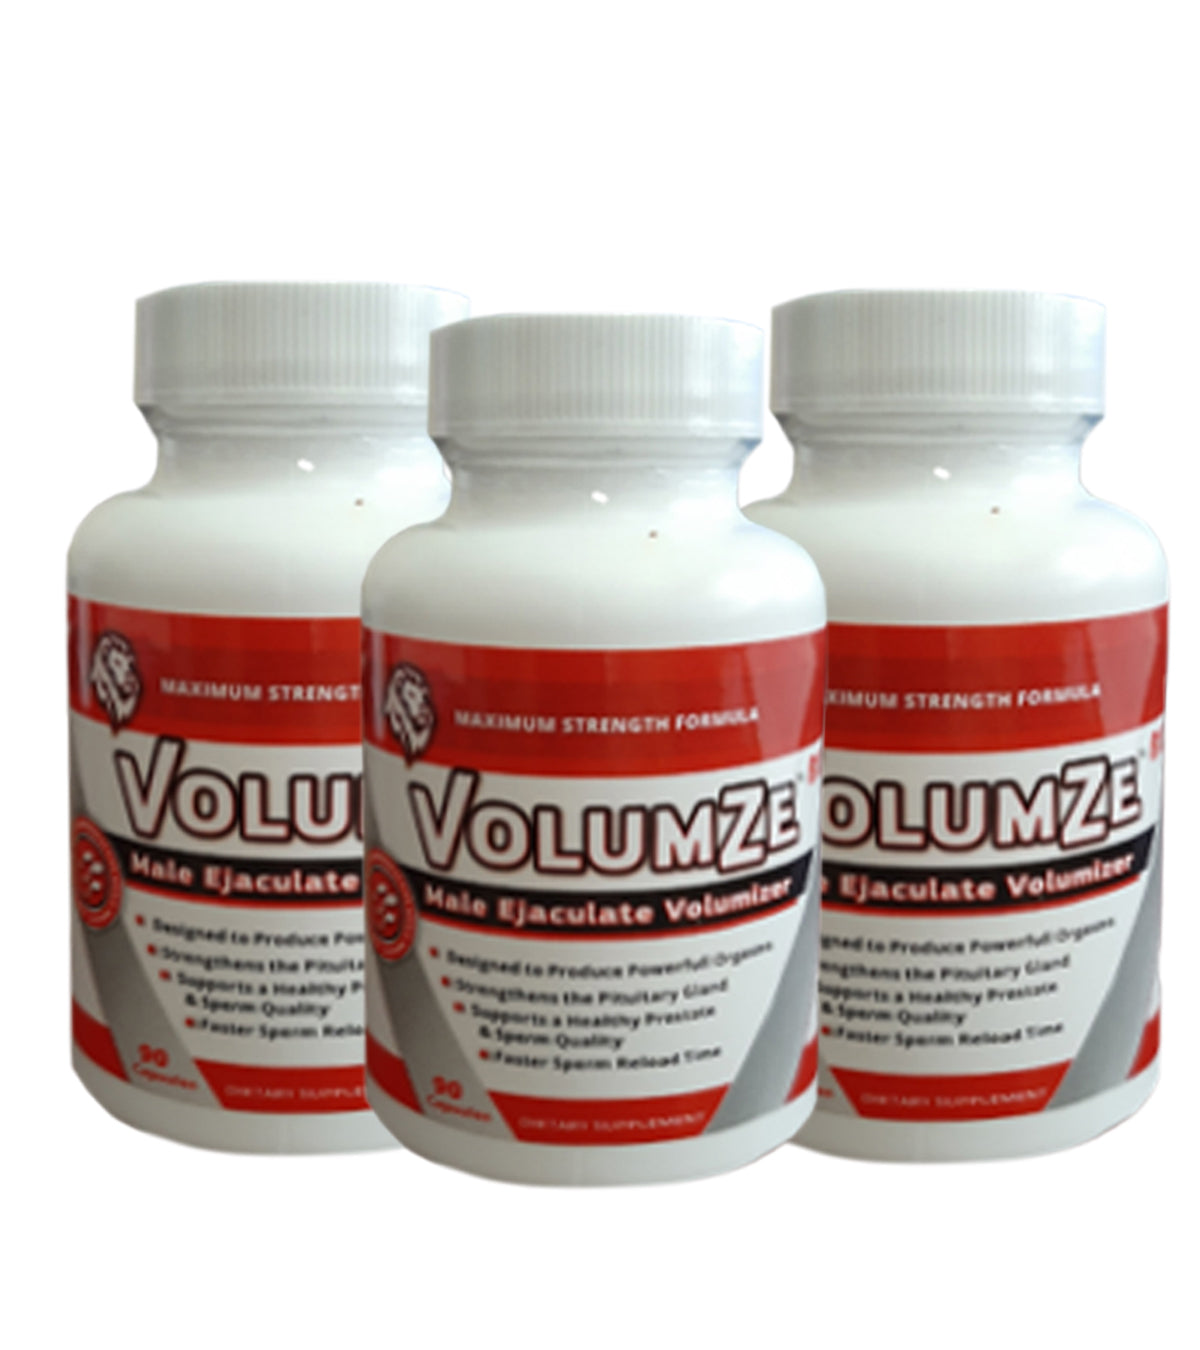 VolumZe - Male Ejaculate Volumizer